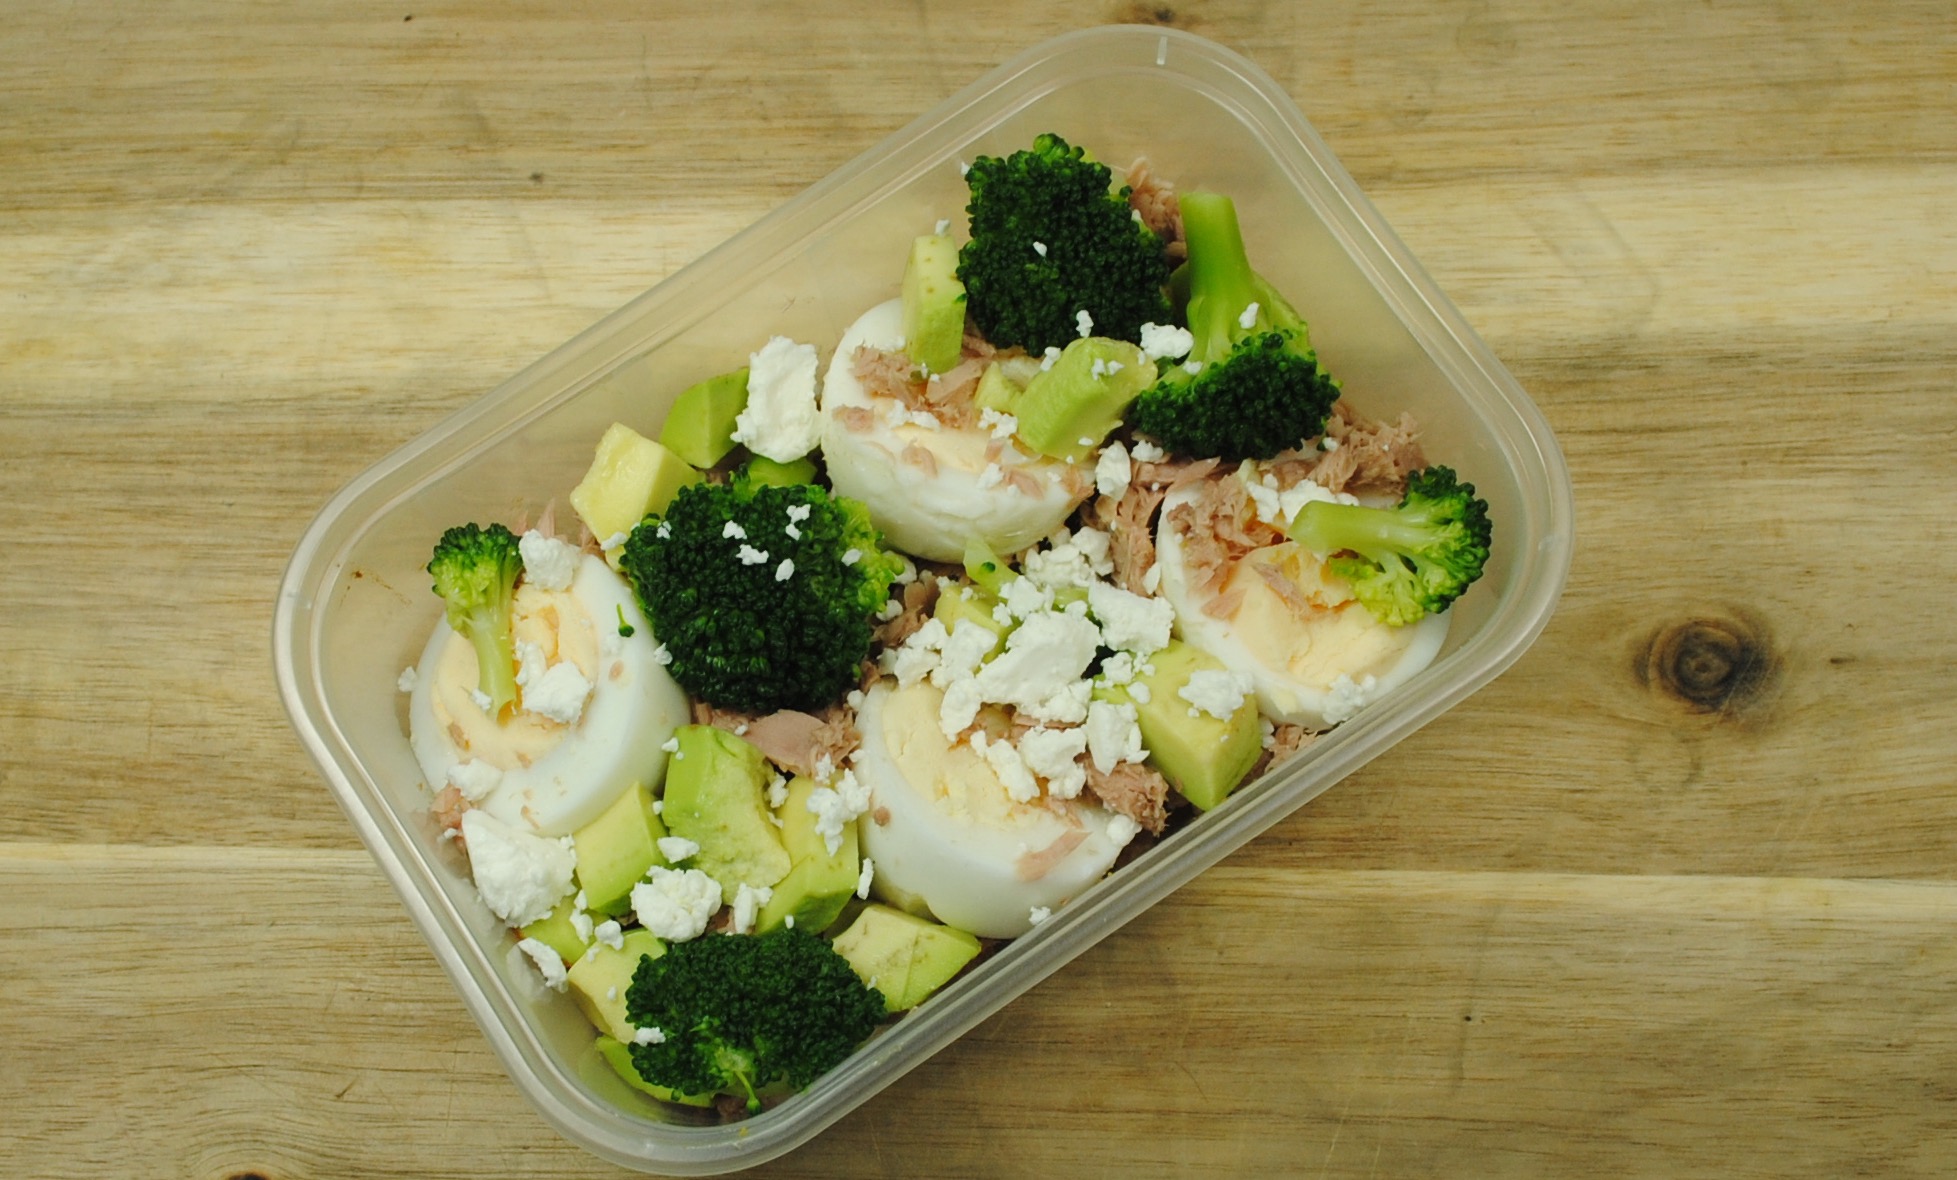 Tuna, Egg, Broccoli and Avocado Salad Box Recipe - 2